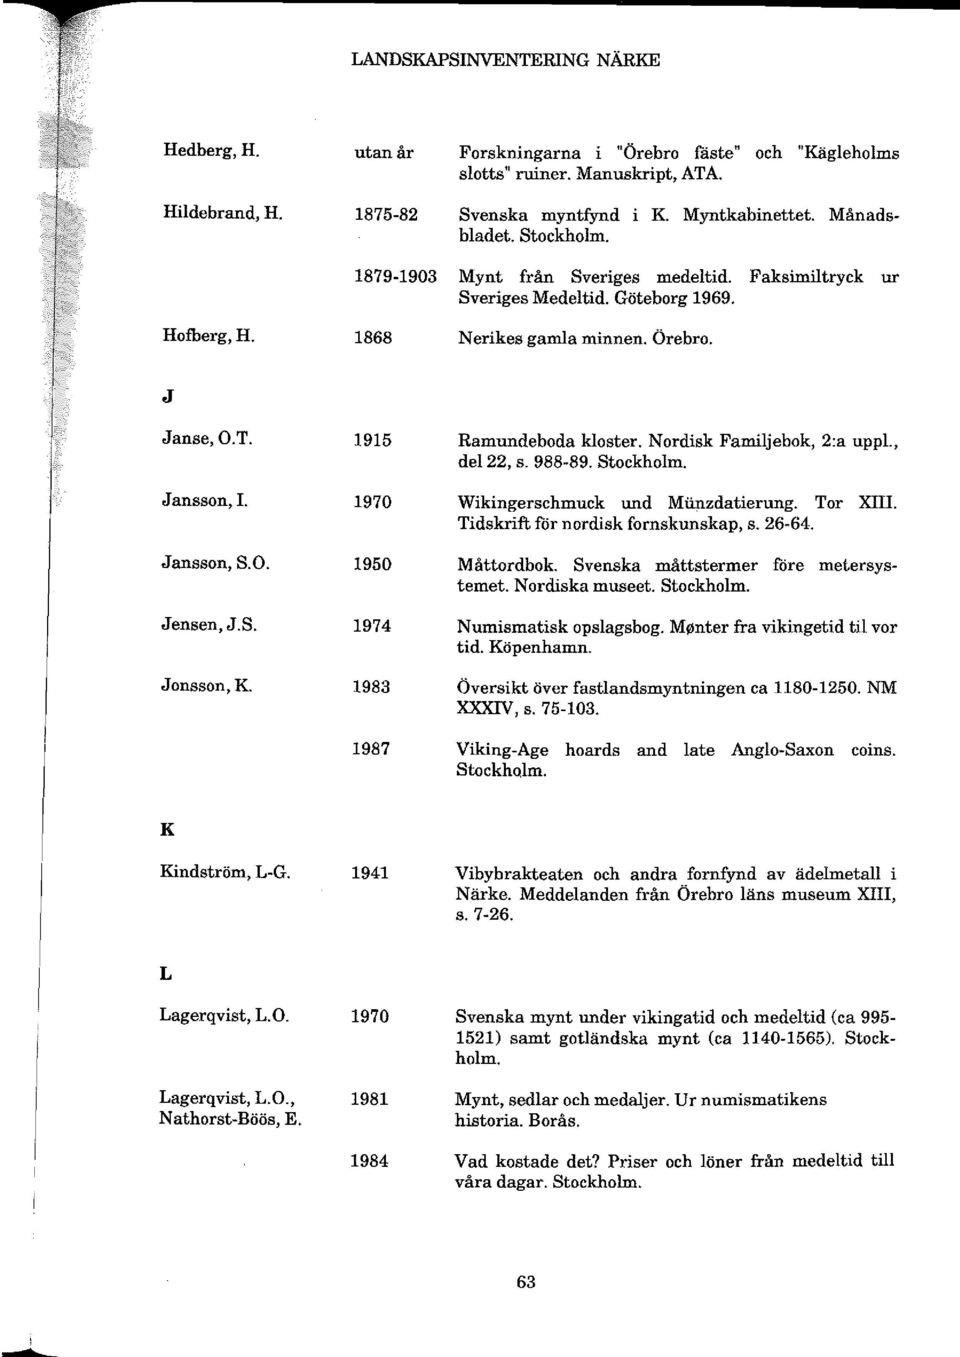 1915 1970 1950 1974 1983 Ramundeboda kloster. Nordisk Familjebok, 2:a upp!., del 22, s. 988-89. Stockholm. Wikingerschmuck und Miinzdatierung. Tor XIII. Tidskrift ftir nordisk fornskunskap, s. 26-64.